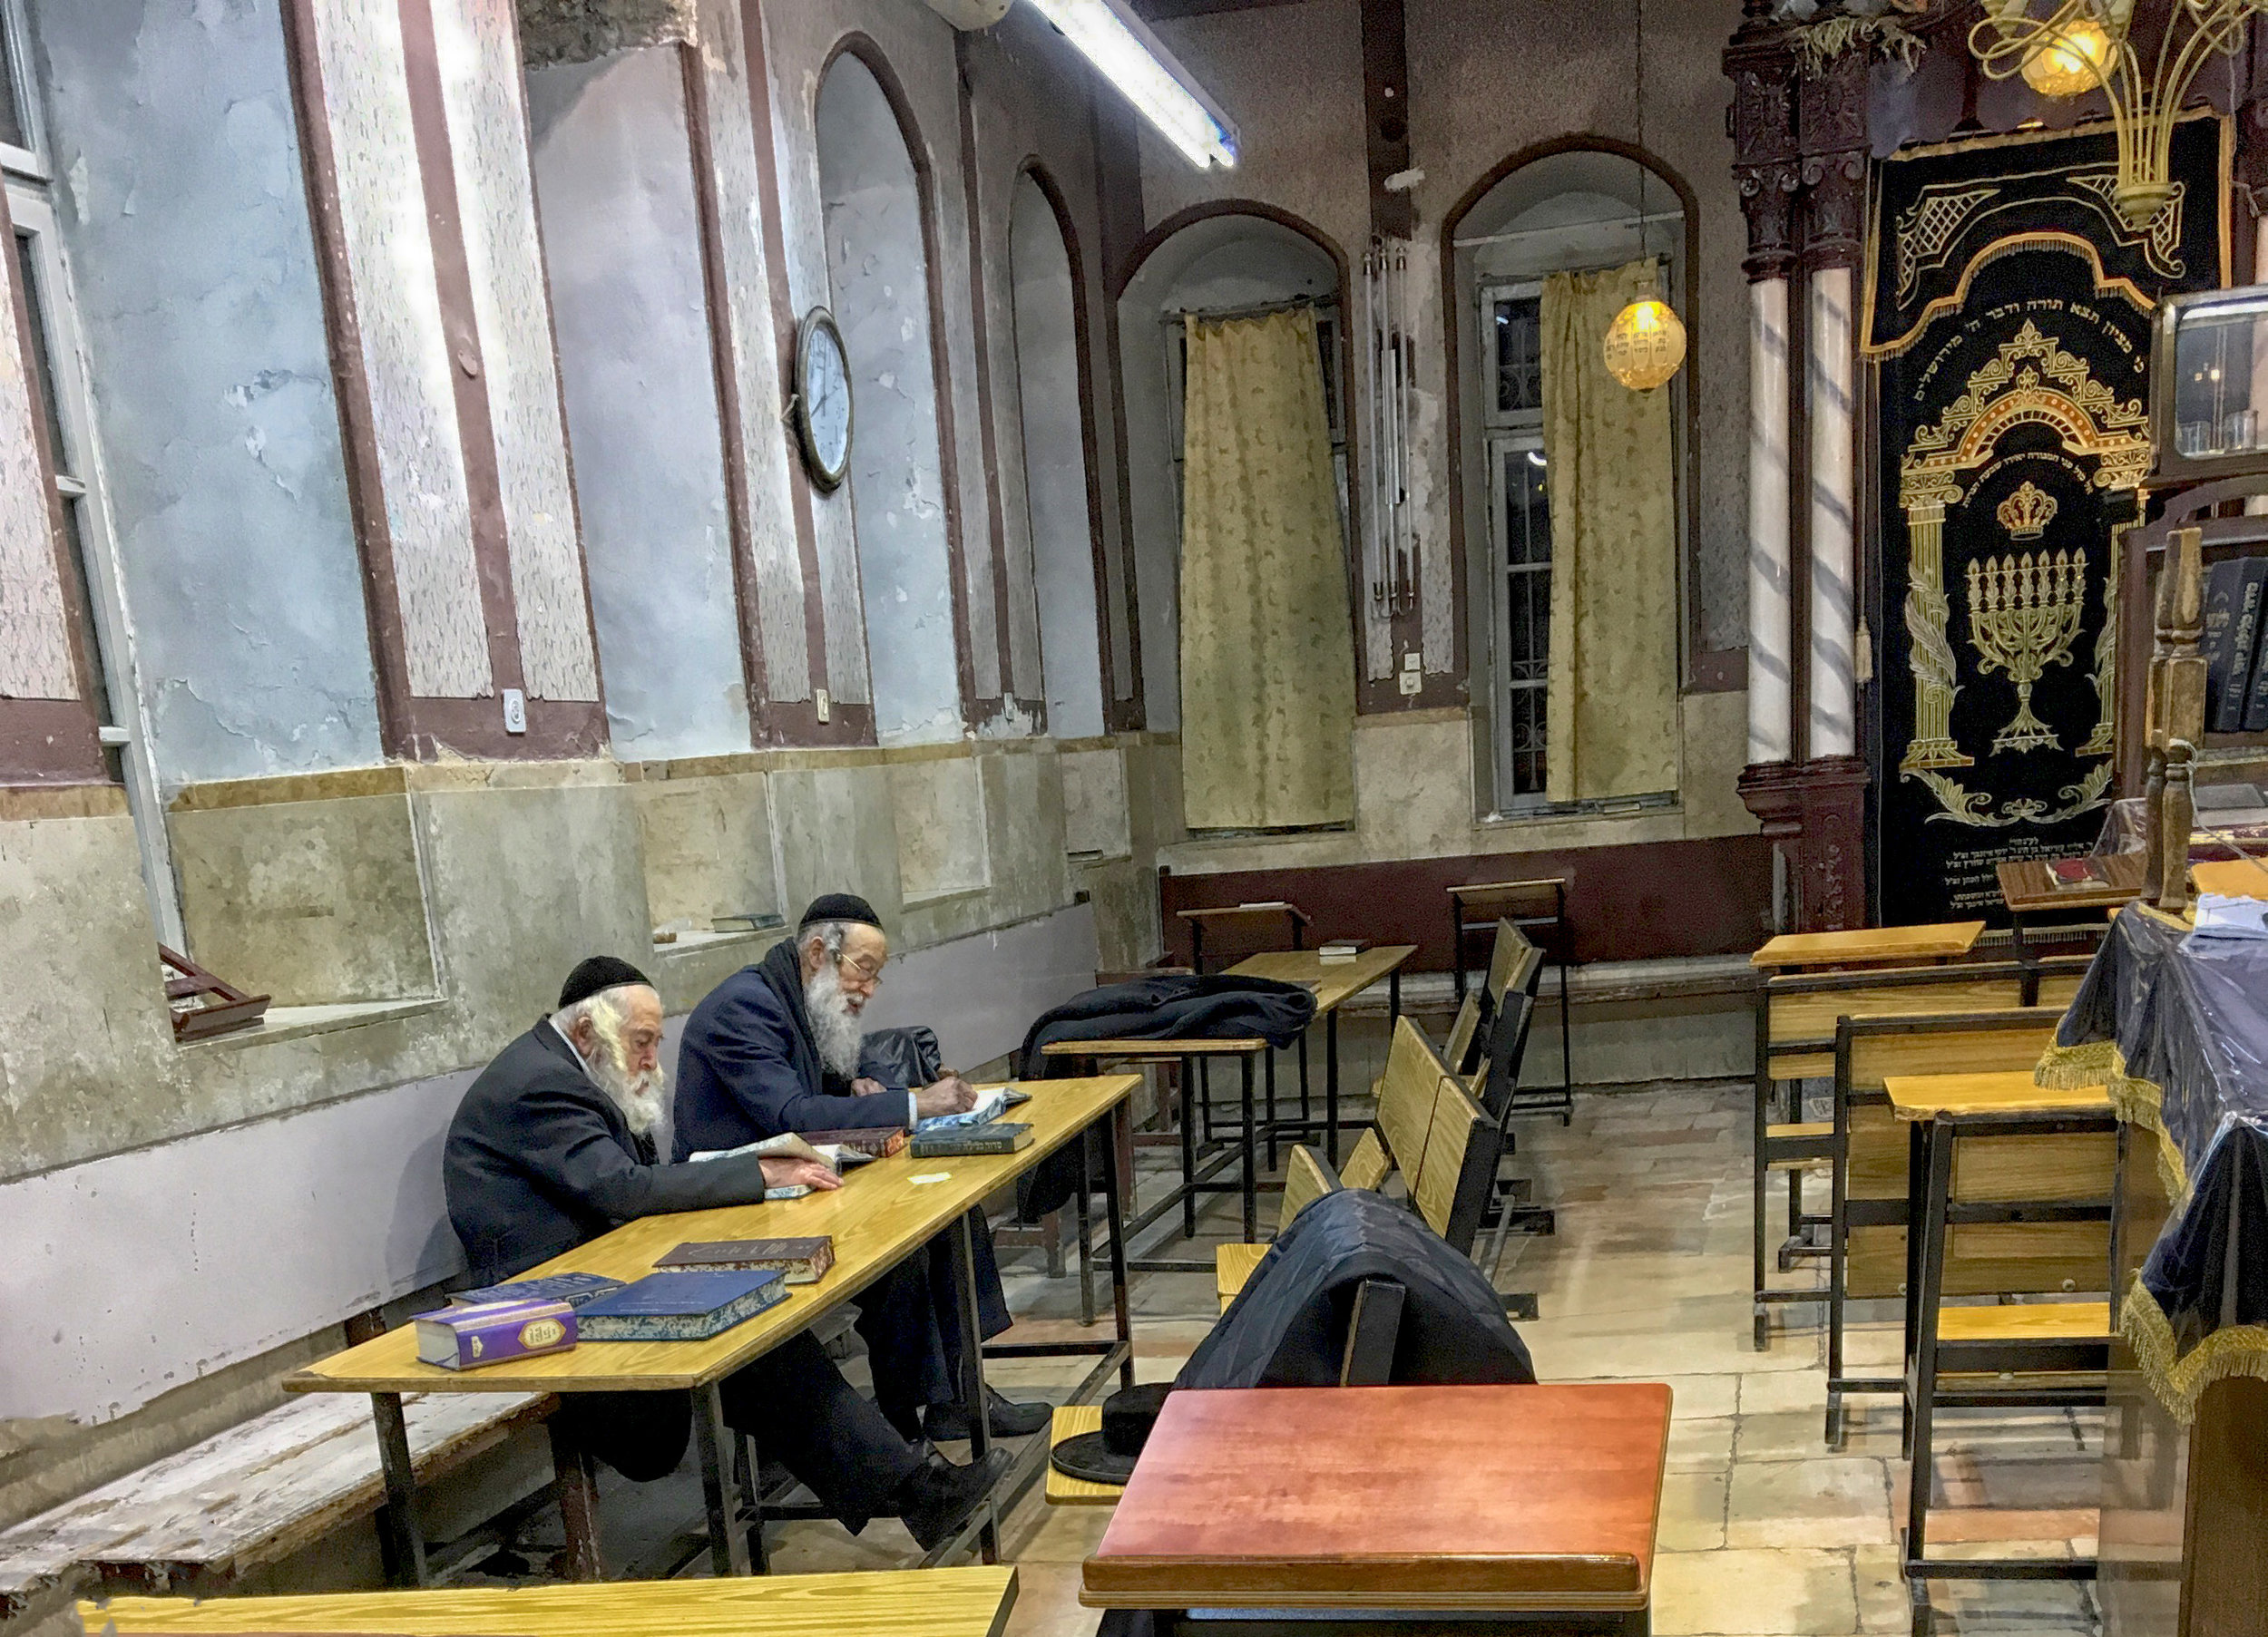 Synagogue, Mea Shearim, Jerusalem